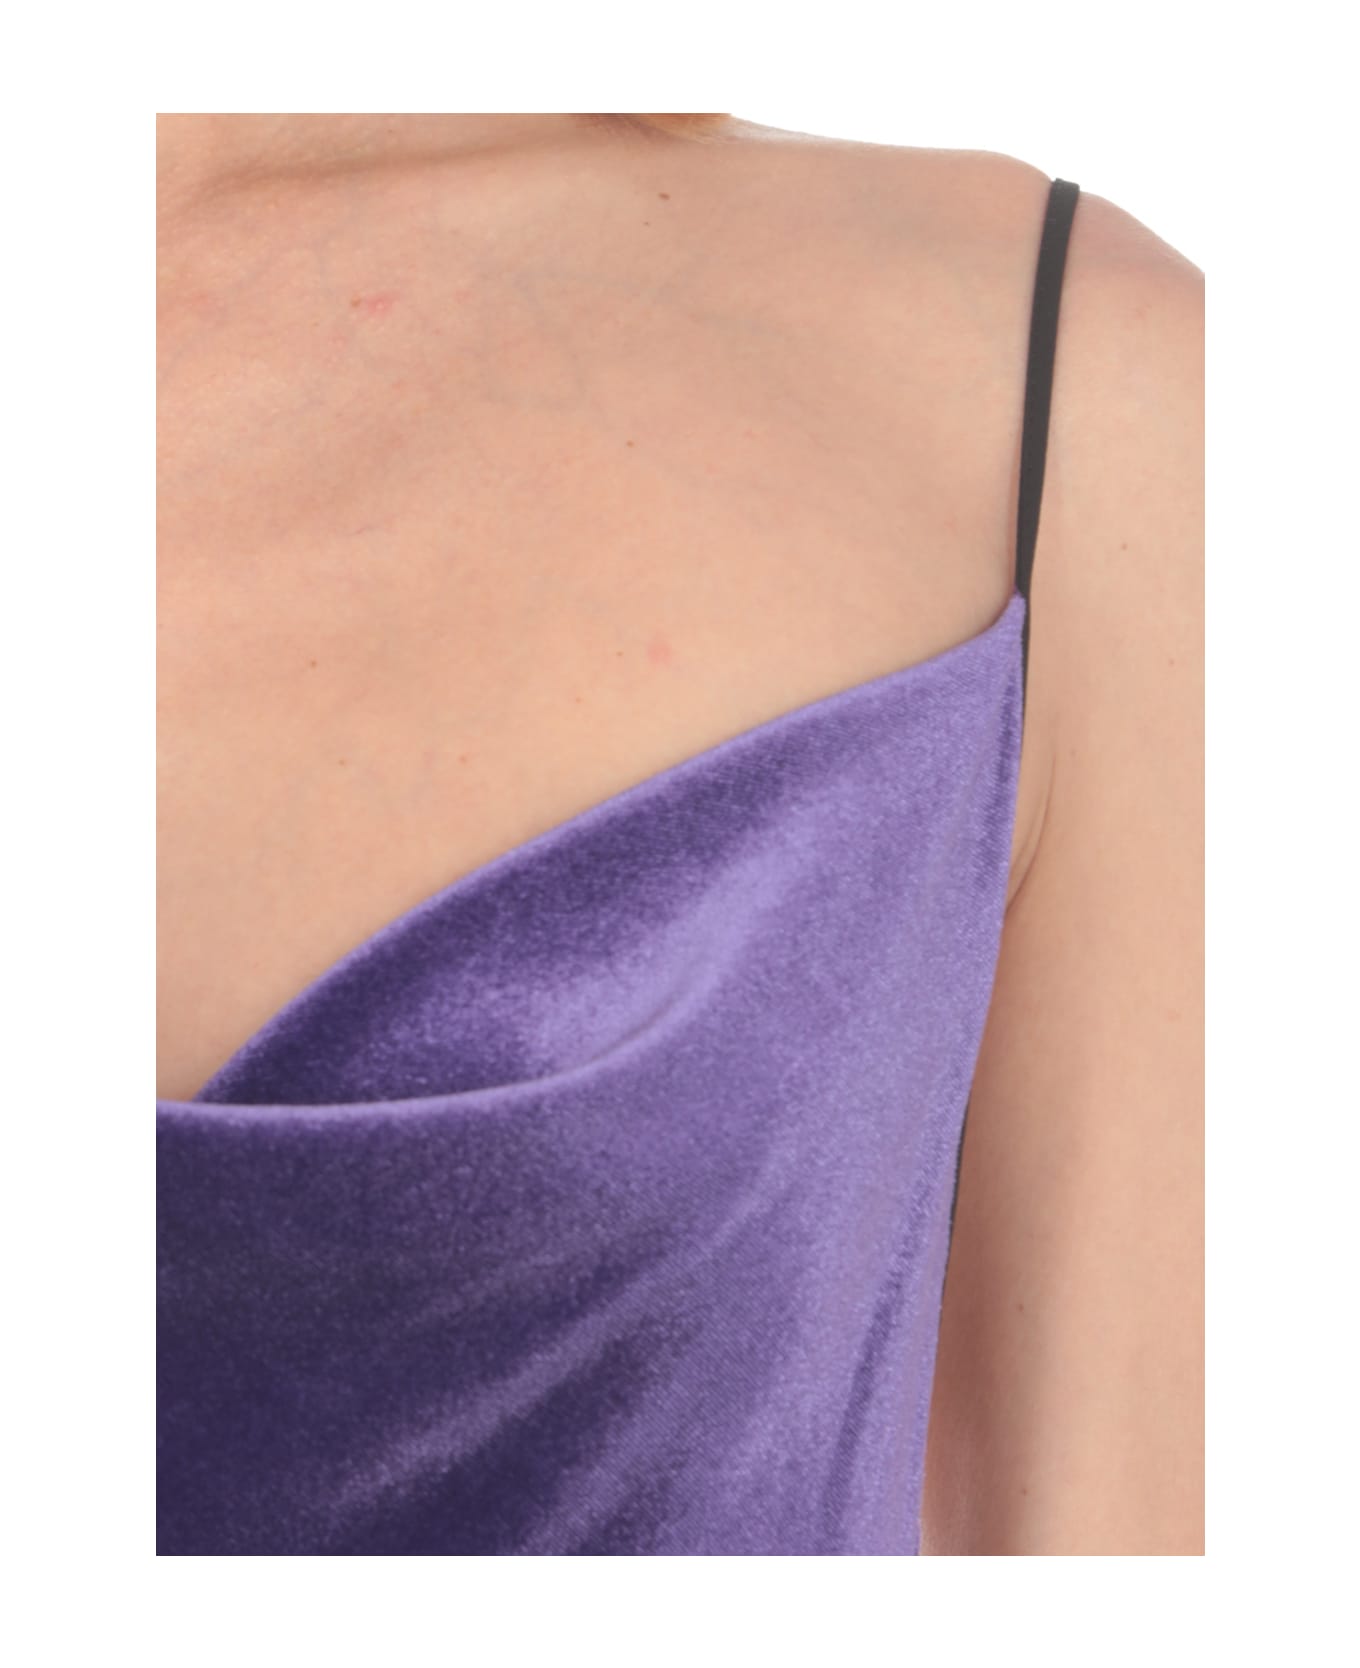 Philosophy di Lorenzo Serafini Stretch Velvet Dress - Purple